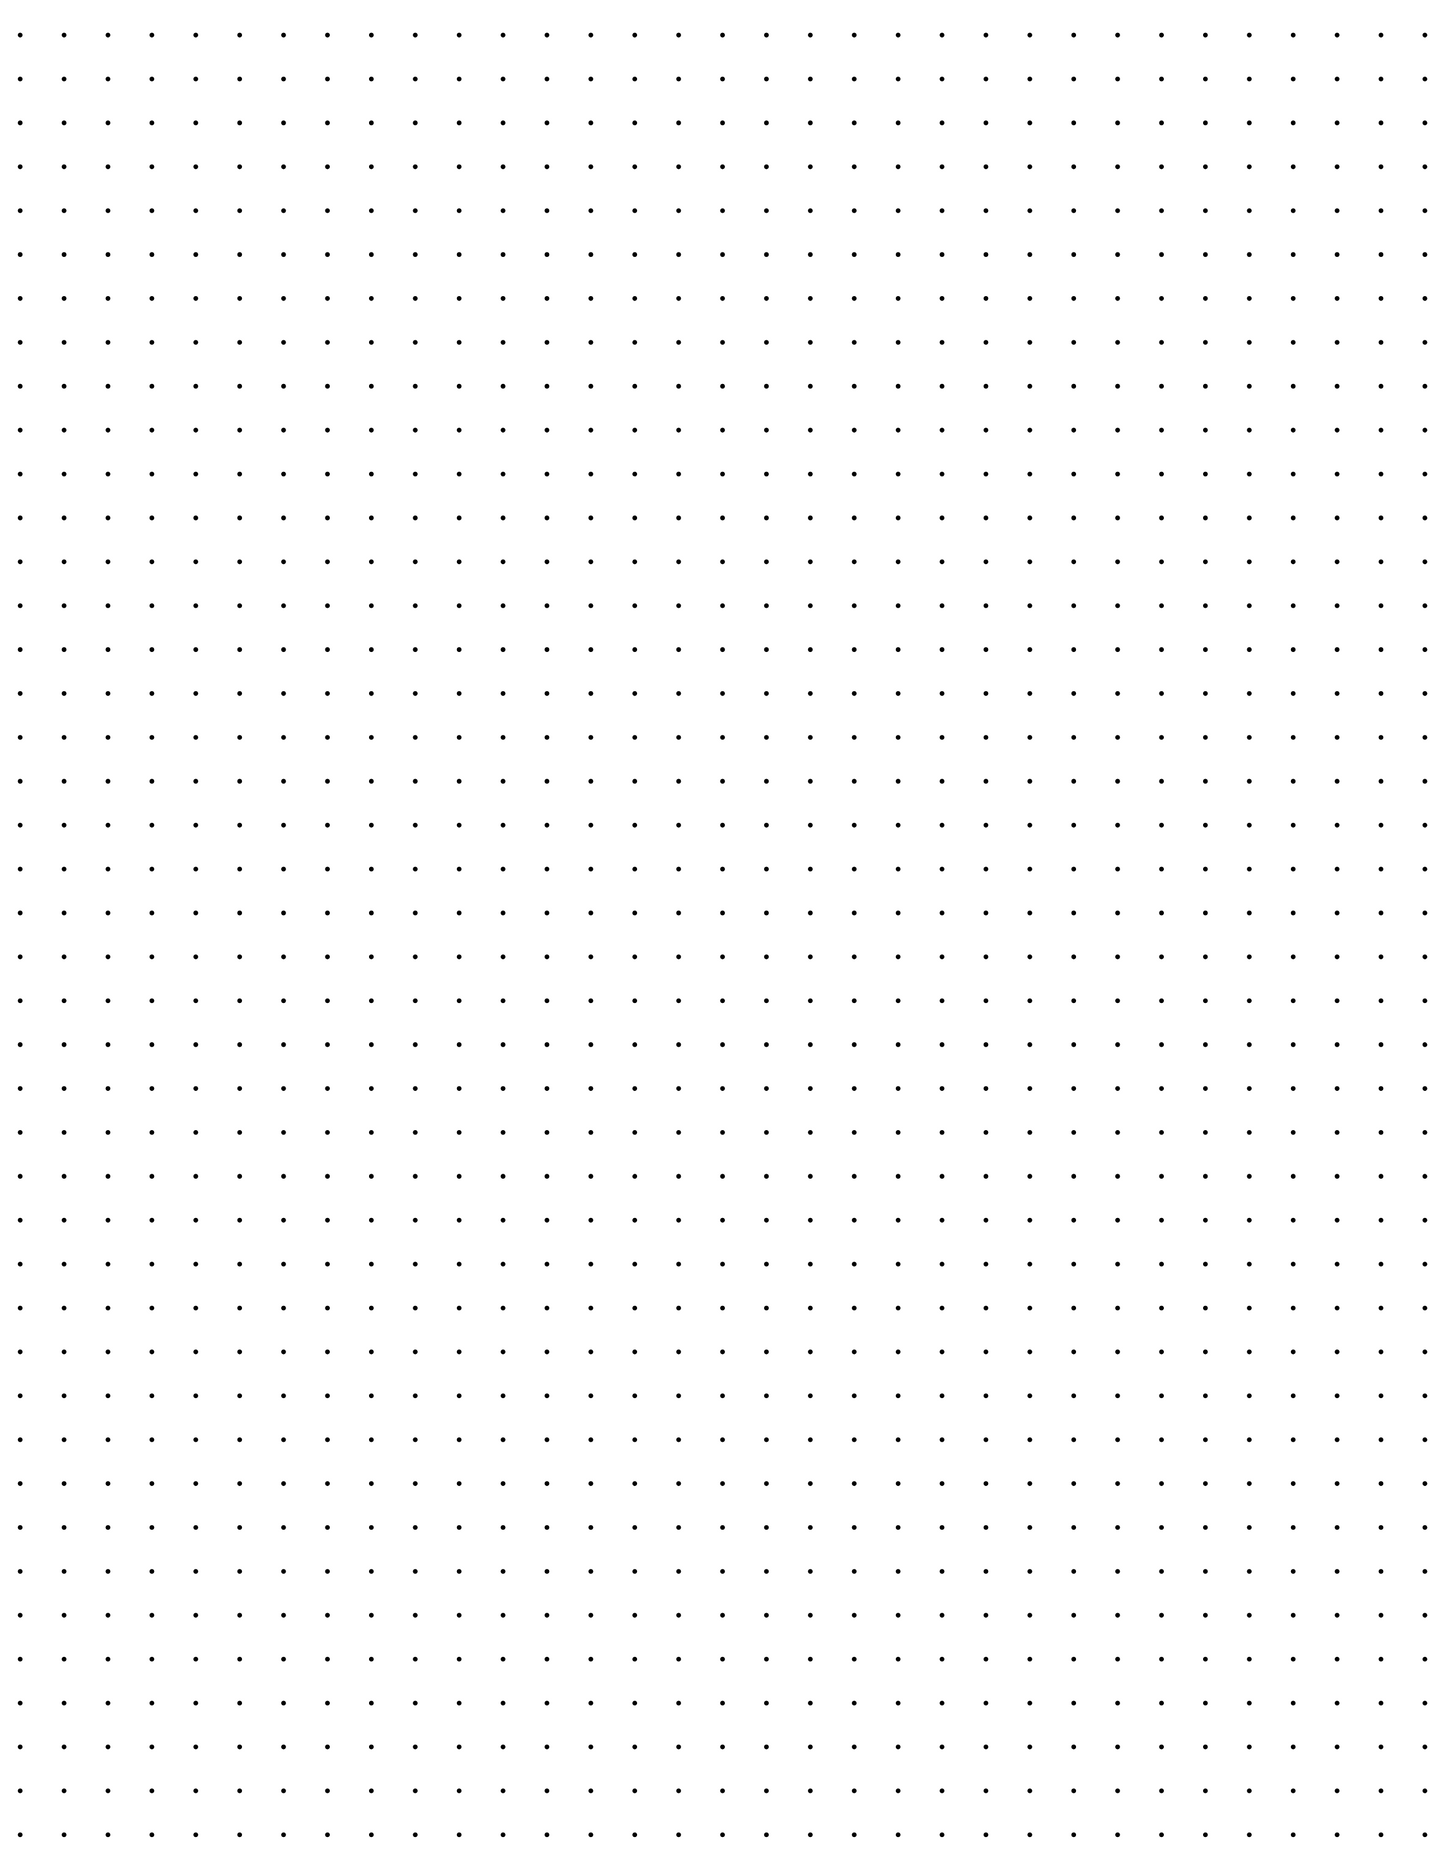 Vintage Invoice Ephemera Soft Cover 8.5" X 11" Dot Grid Journal